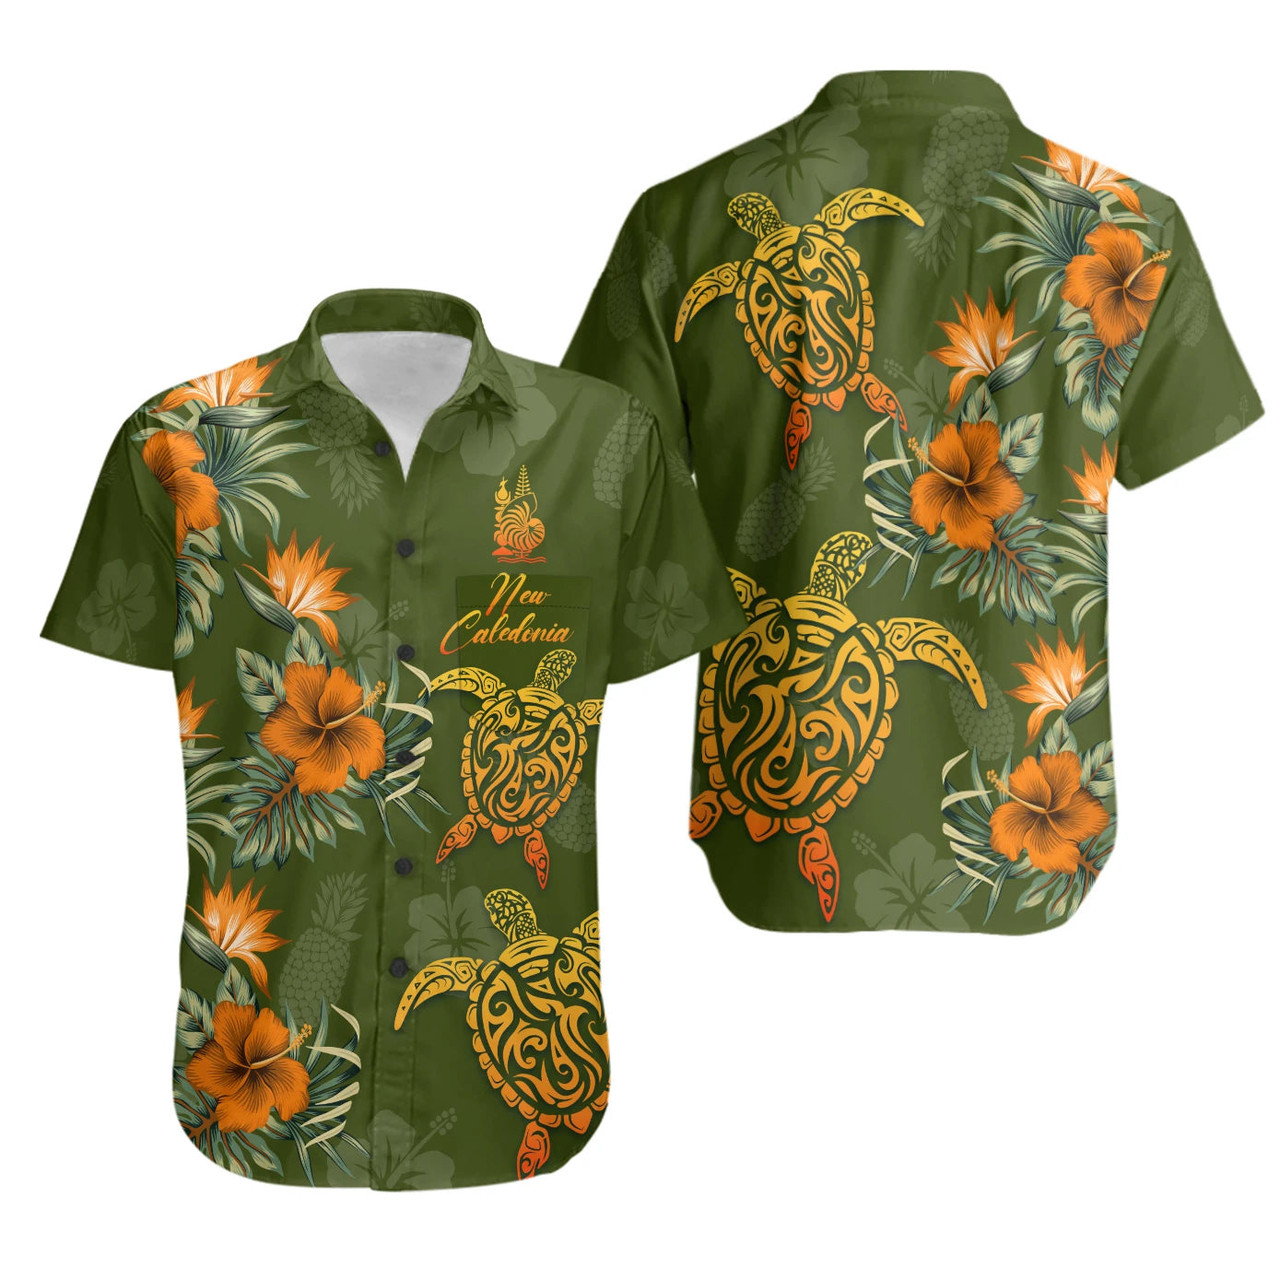 New Caledonia Polynesian Hawaiian Shirts - Tropical Summer 1